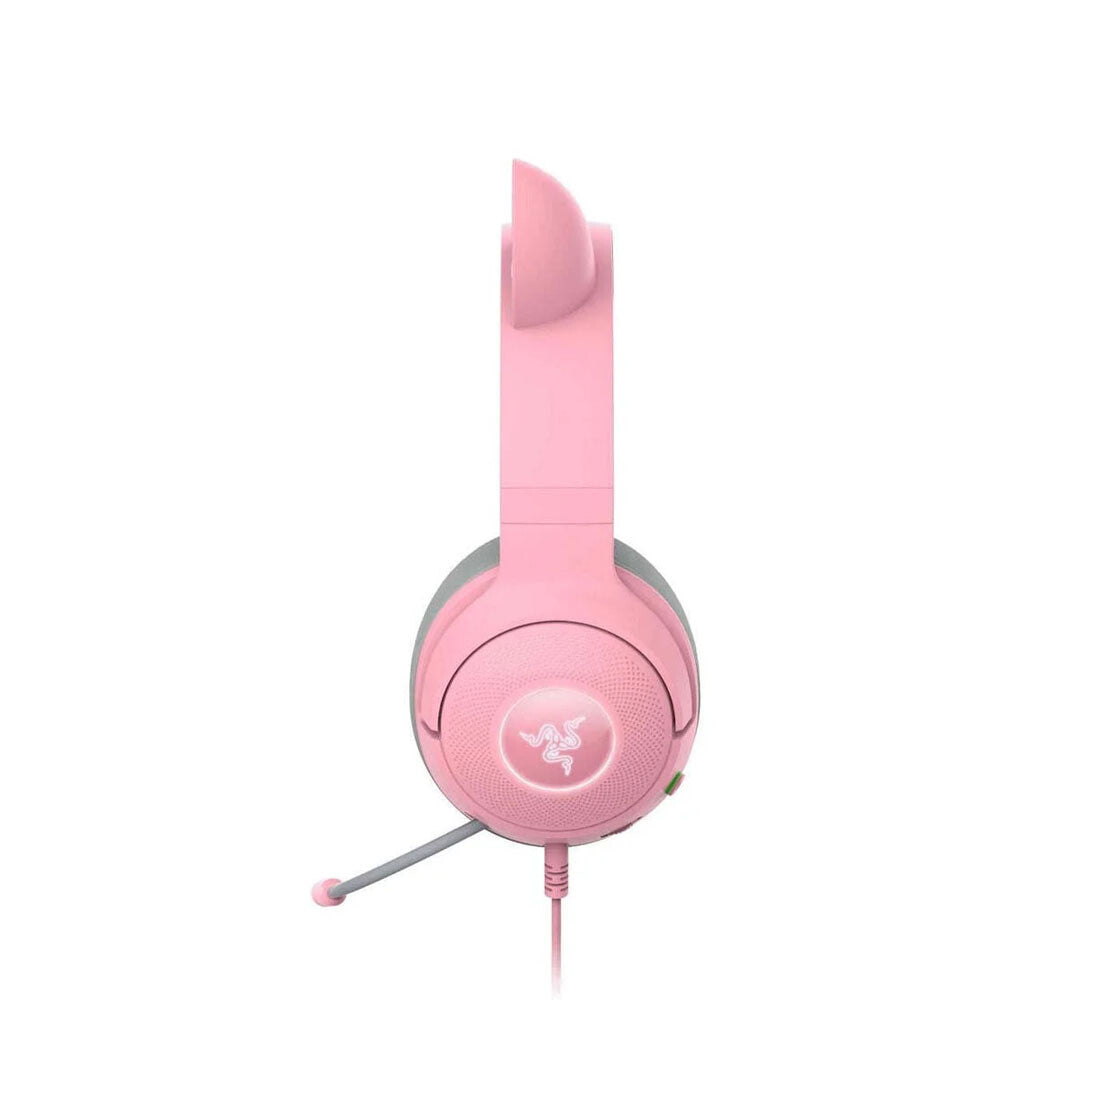 Razer Kraken Kitty V2 Pro - USB Type-A Wired Gaming Headset in Pink